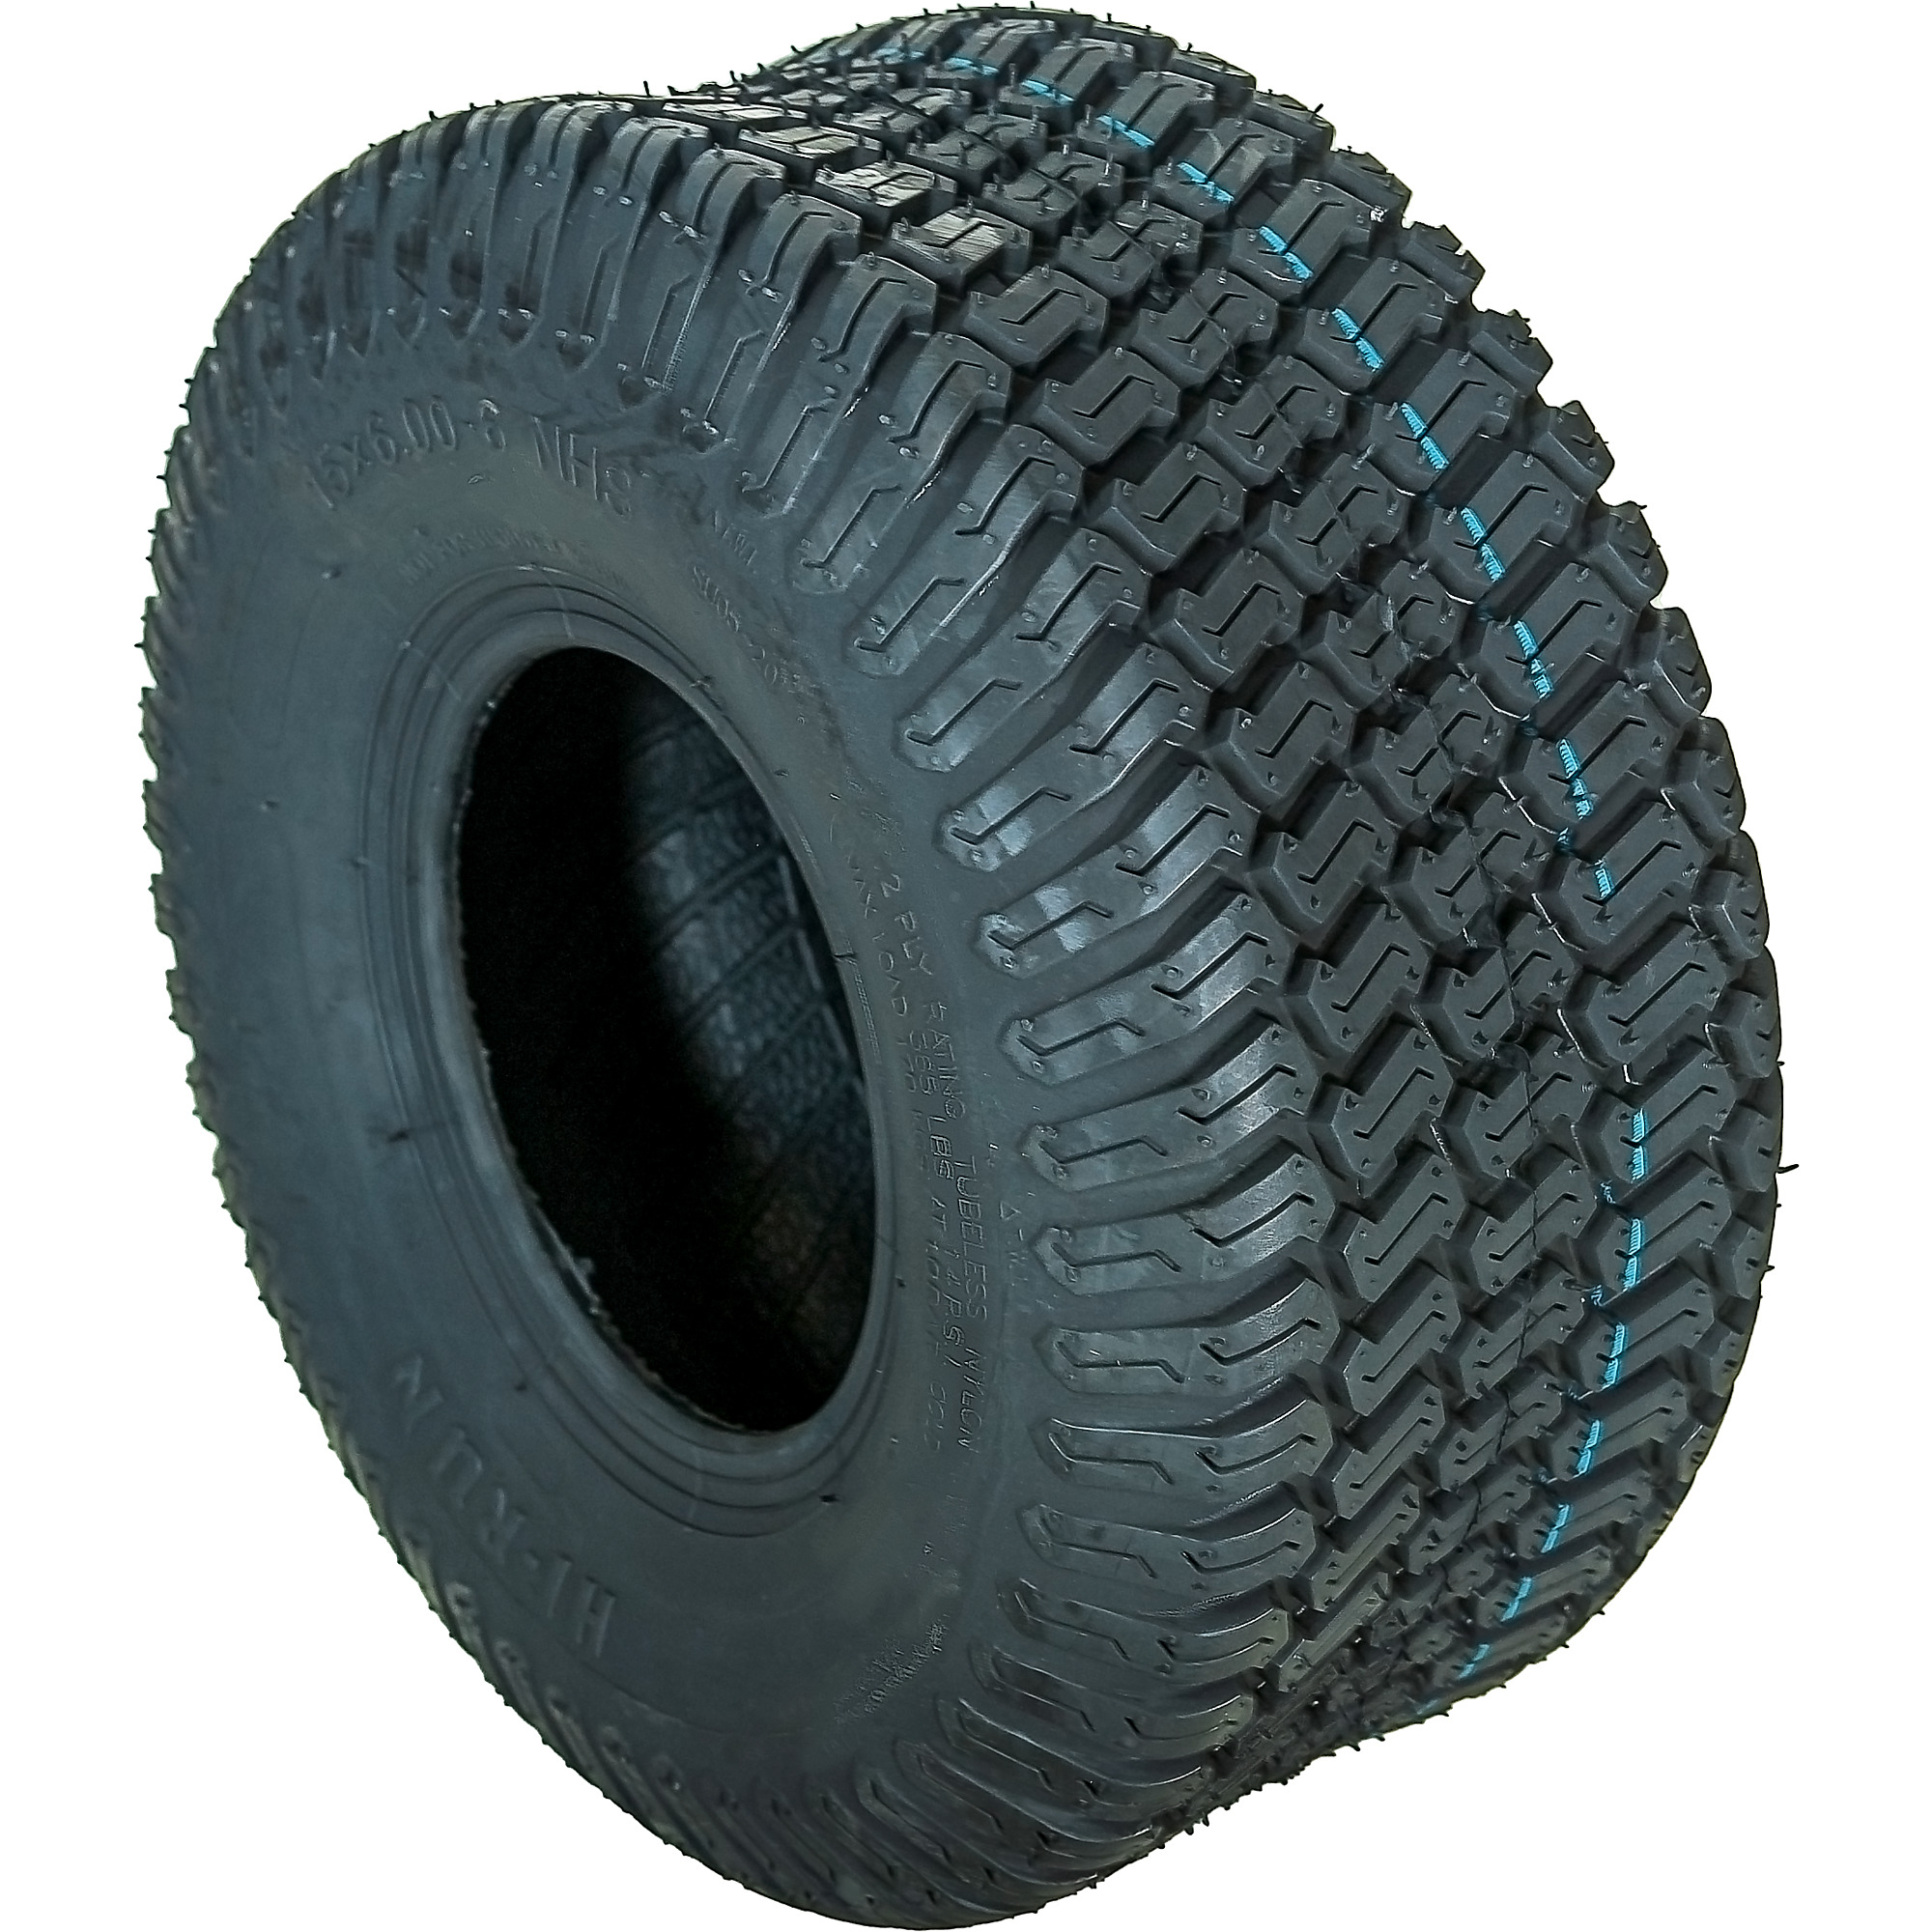 HI-RUN, Lawn Garden Tire, SU05 Turf, Tire Size 15X6.00-6 Load Range Rating A, Model WD1030